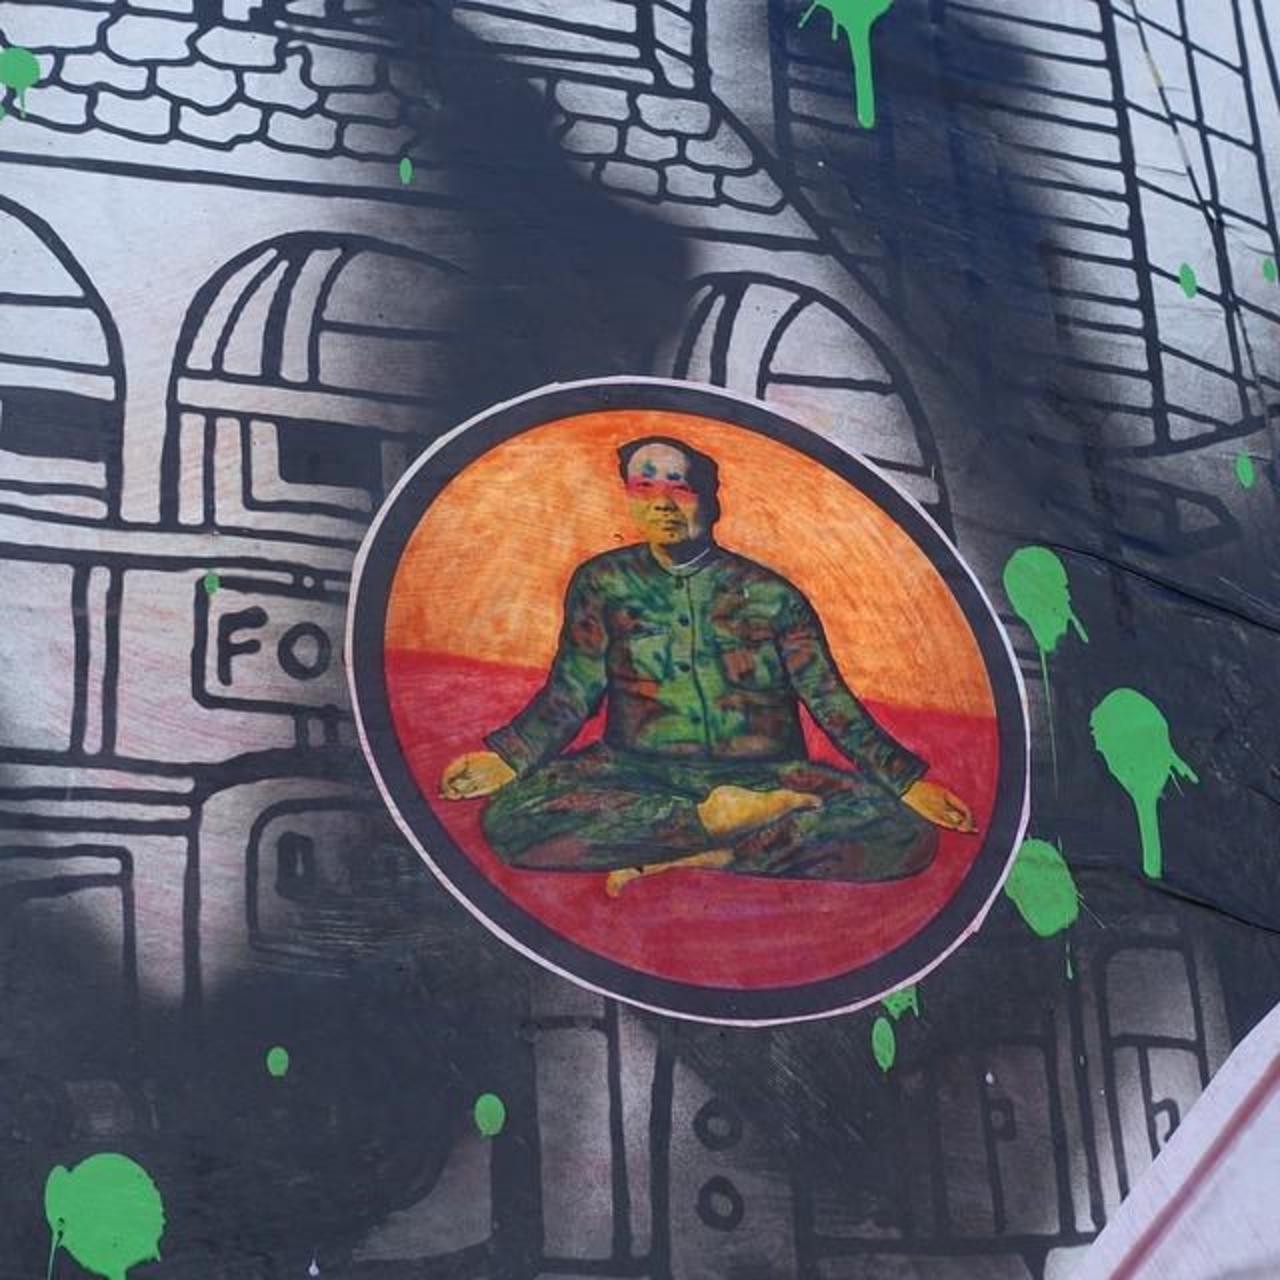 #Mao #Yoga #San_Francisco #StreetArt #UrbanArt #Graffiti https://t.co/jOUqoUO7Mg RT @Dame_Rouge @GraffitiFeed @Art_Narurally